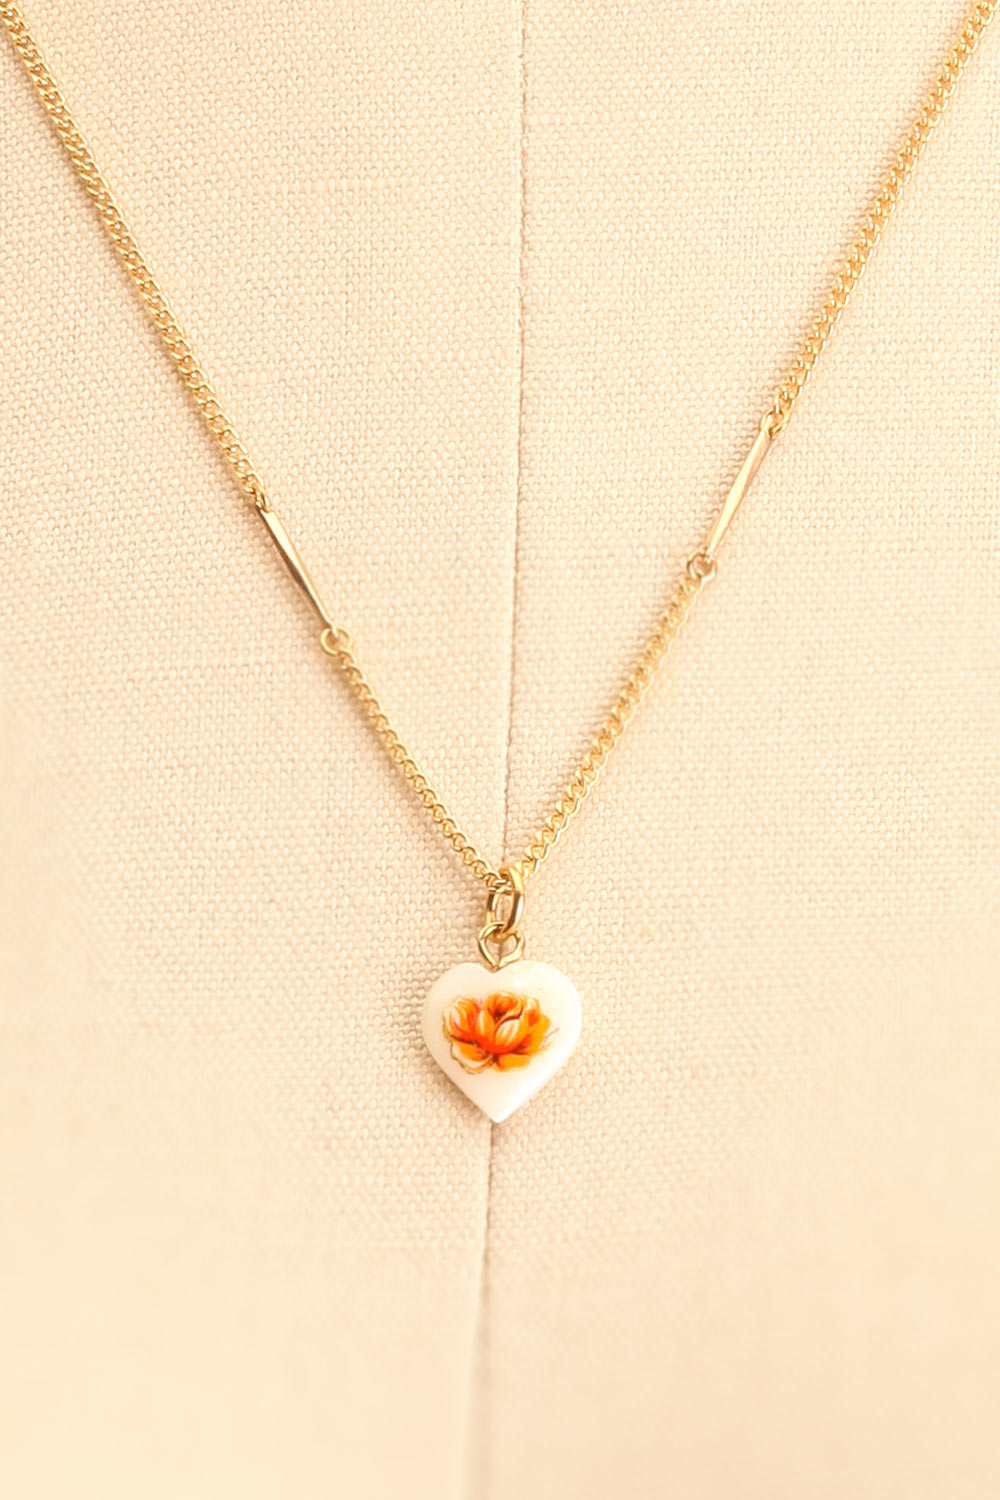 Virna Lisi Dainty Golden Heart Floral Pendant Necklace | Boutique 1861 4